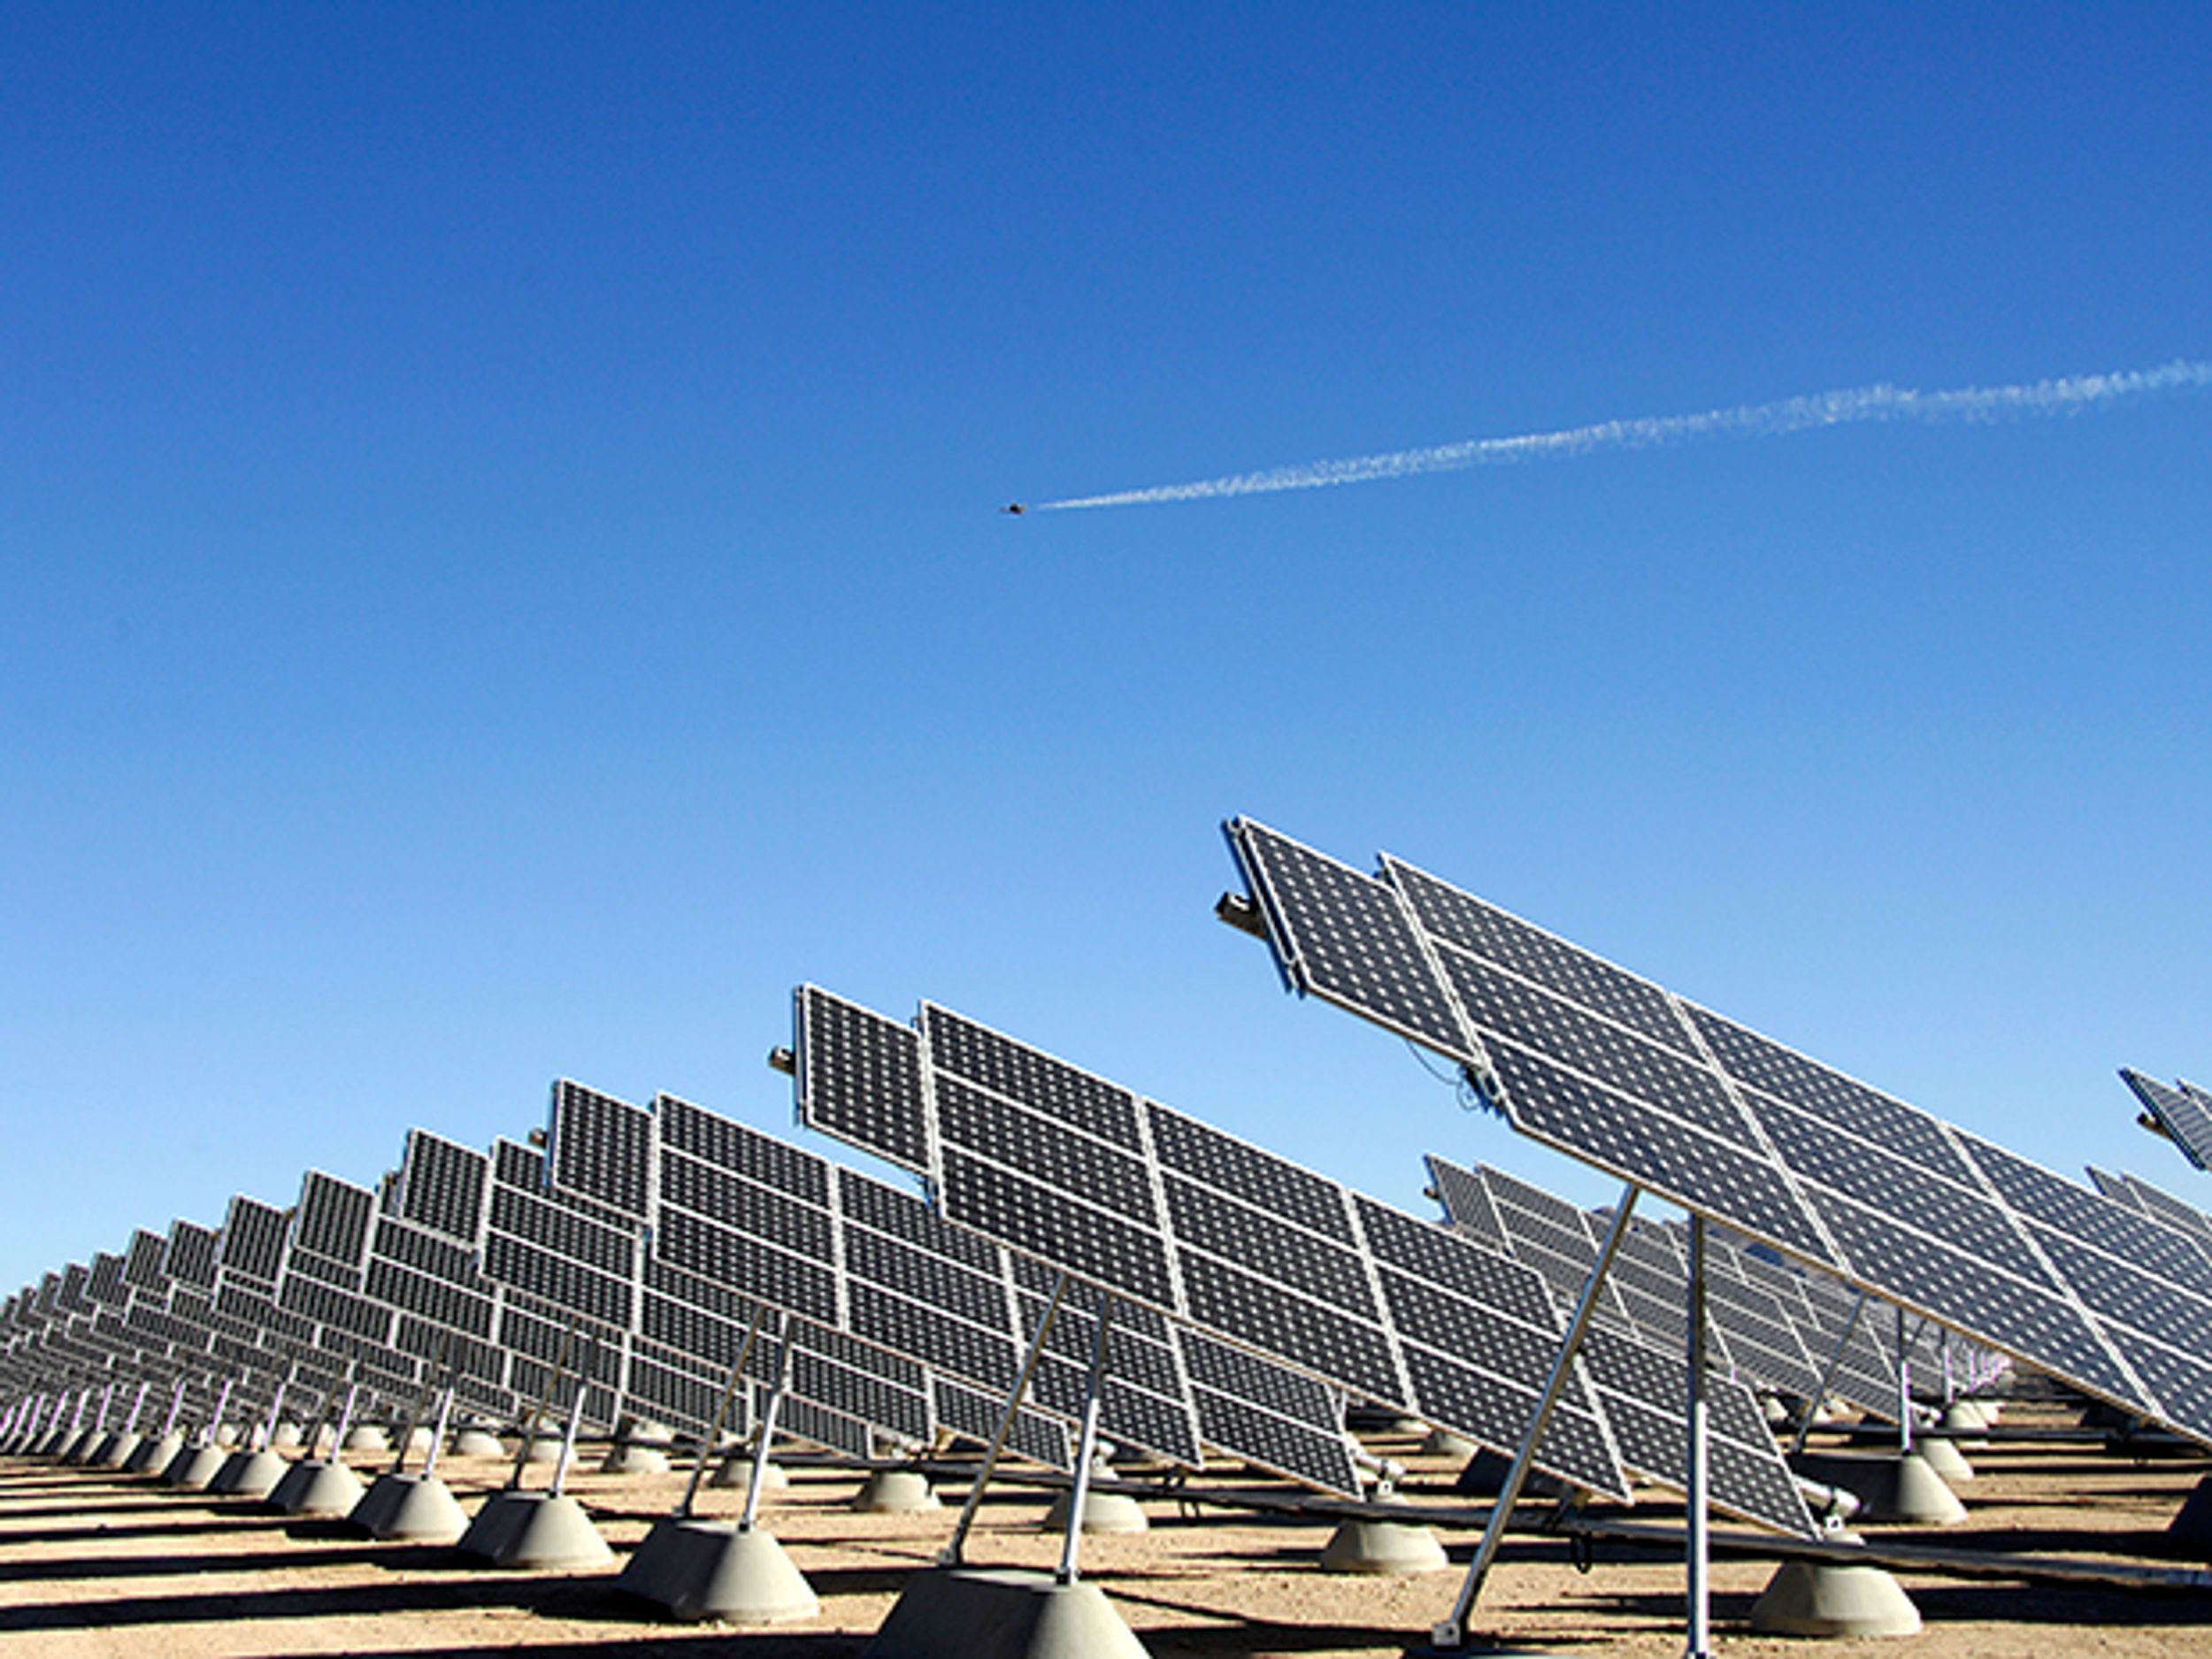 14-megawatt photovoltaic array